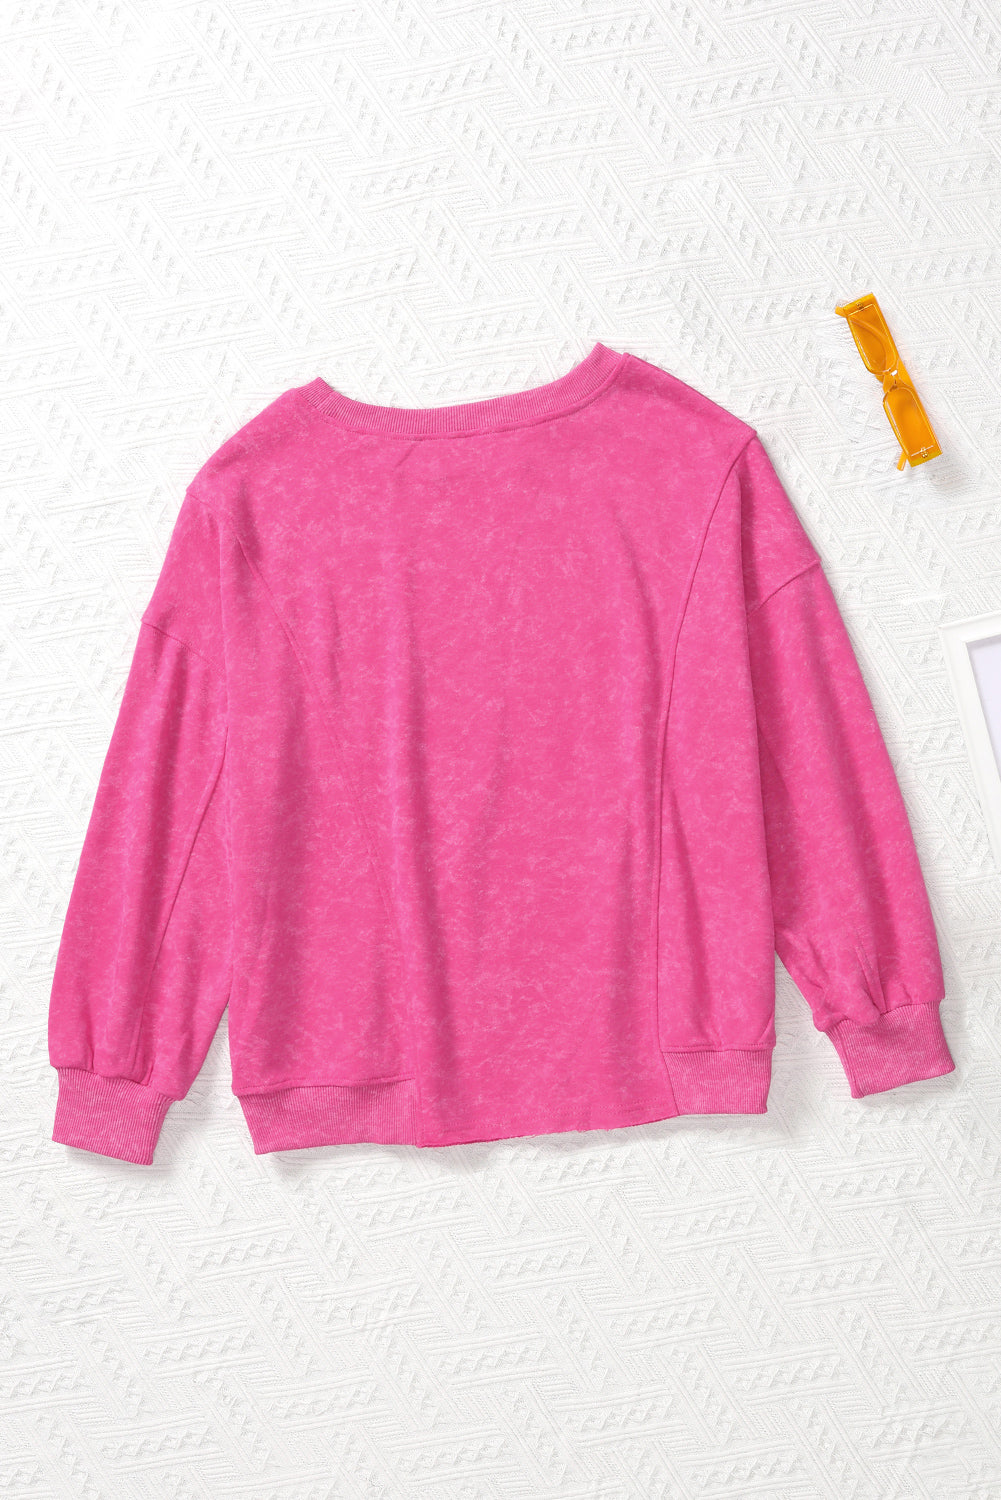 Blank Sweatshirt - Rosy Distressed Casual Loose Pullover Sweatshirt Customized